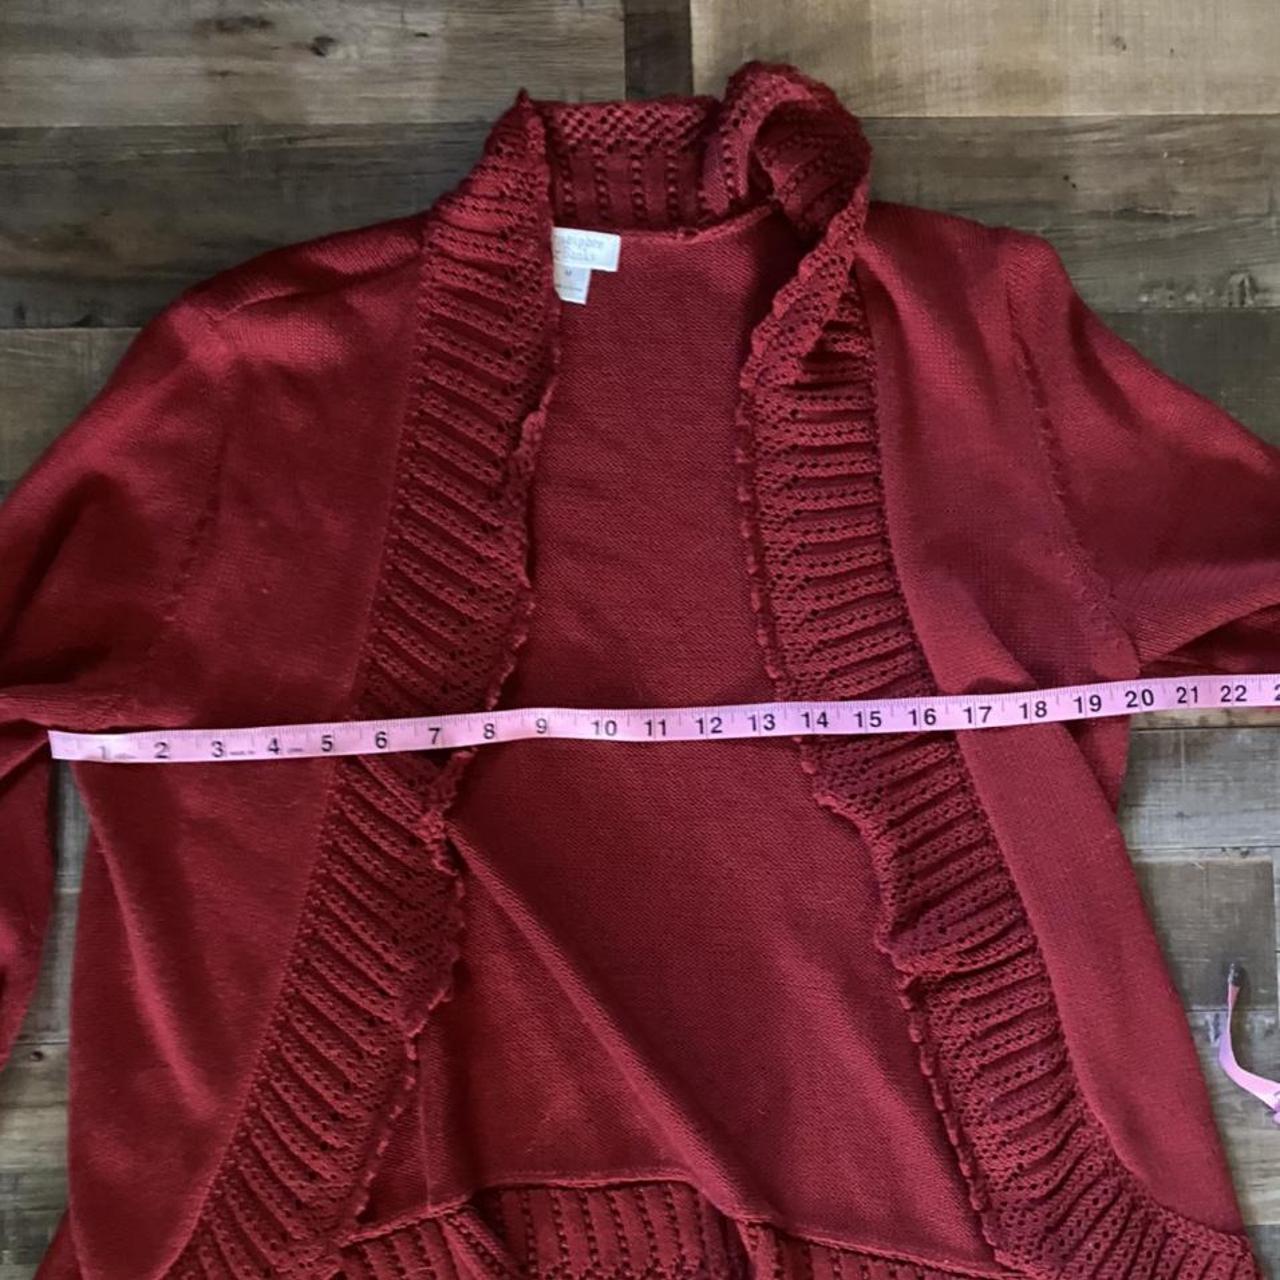 Product Image 2 - Vintage Red Knit Cardigan!❄️ 
Super